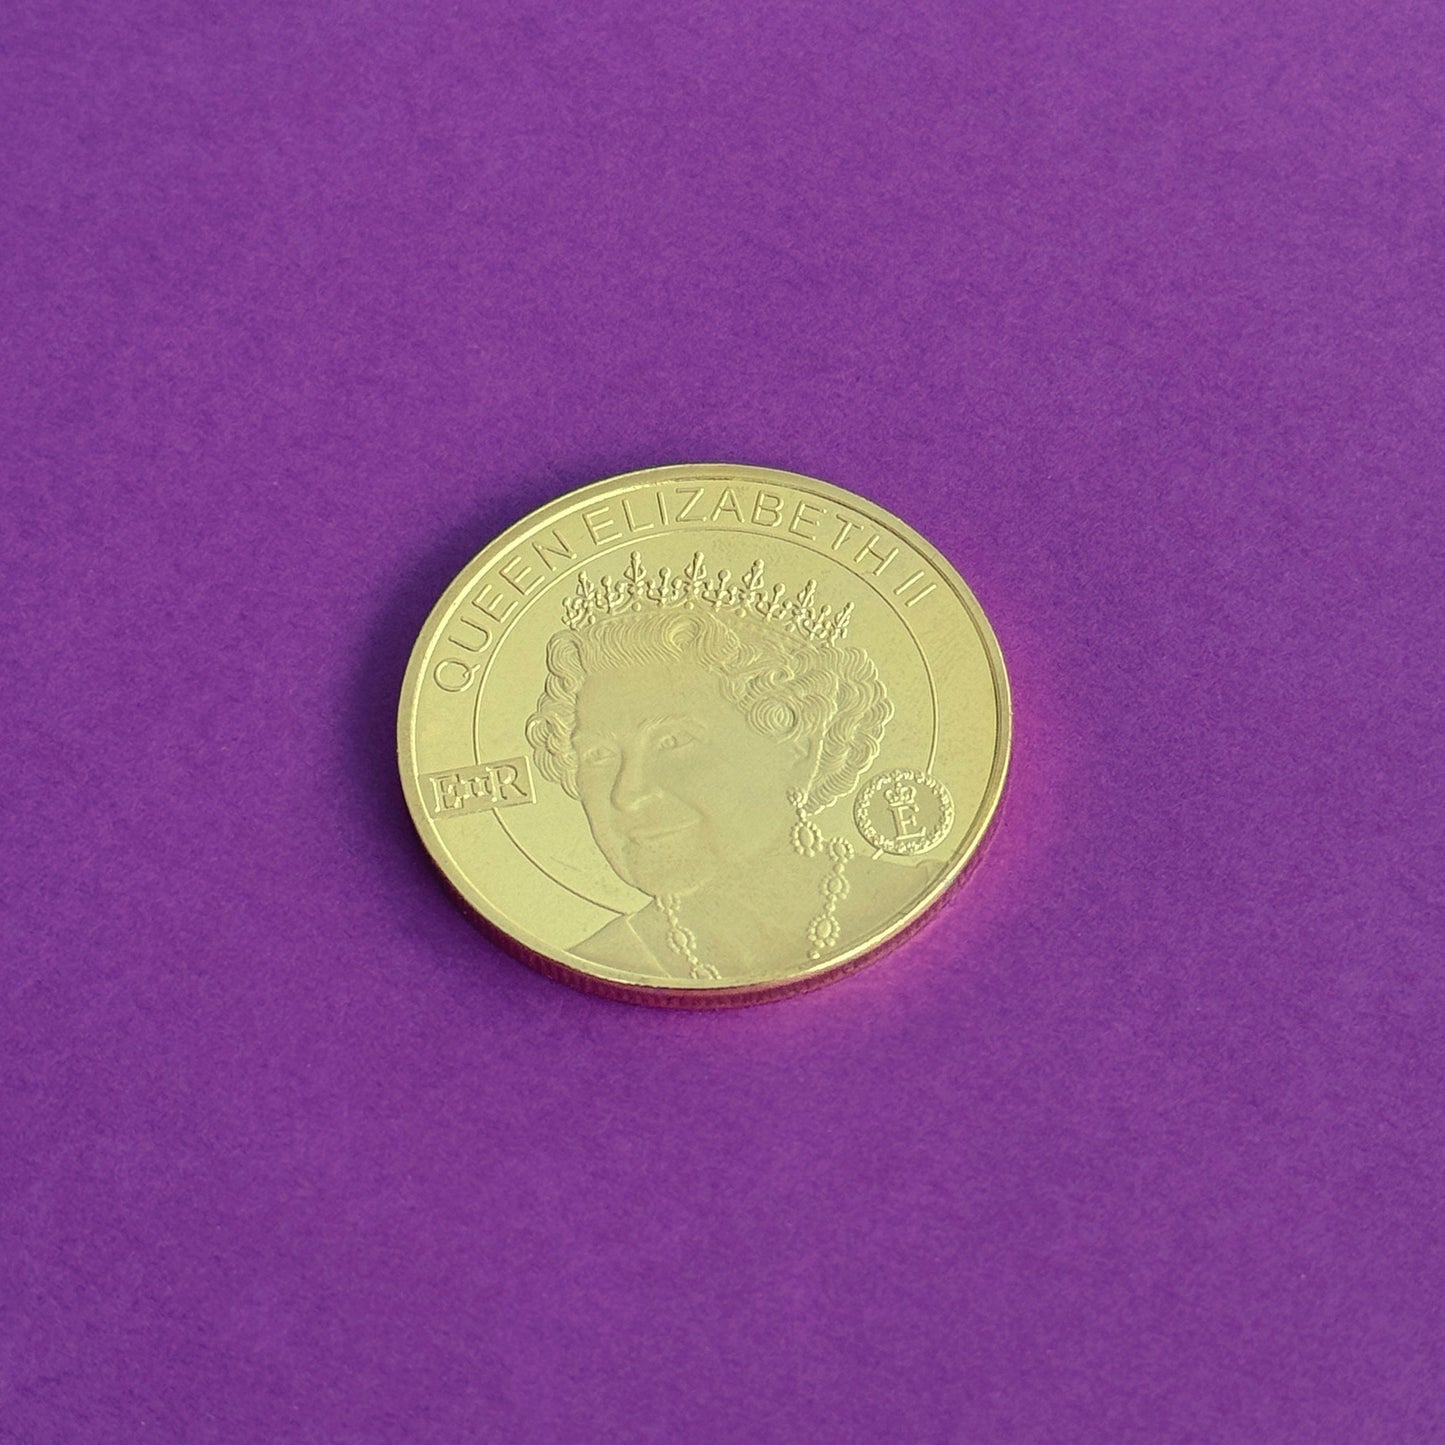 Prince William & Catherine Gold Commemorative Coins